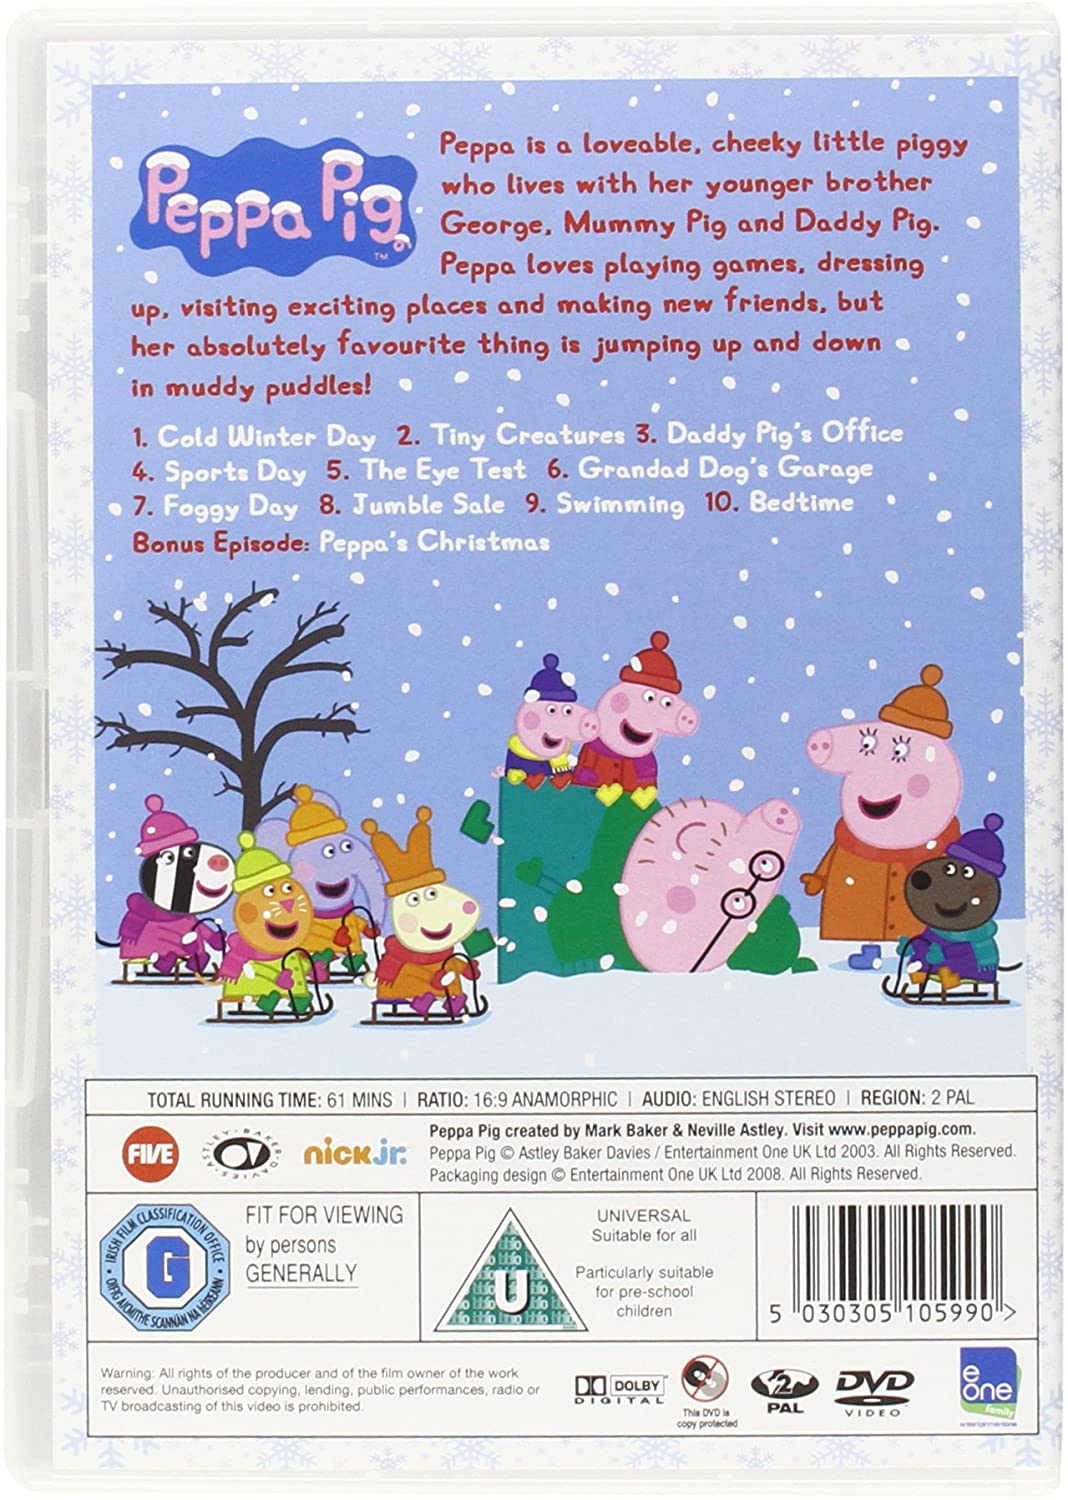 Peppa Pig: Cold Winter Day [Volume 10]